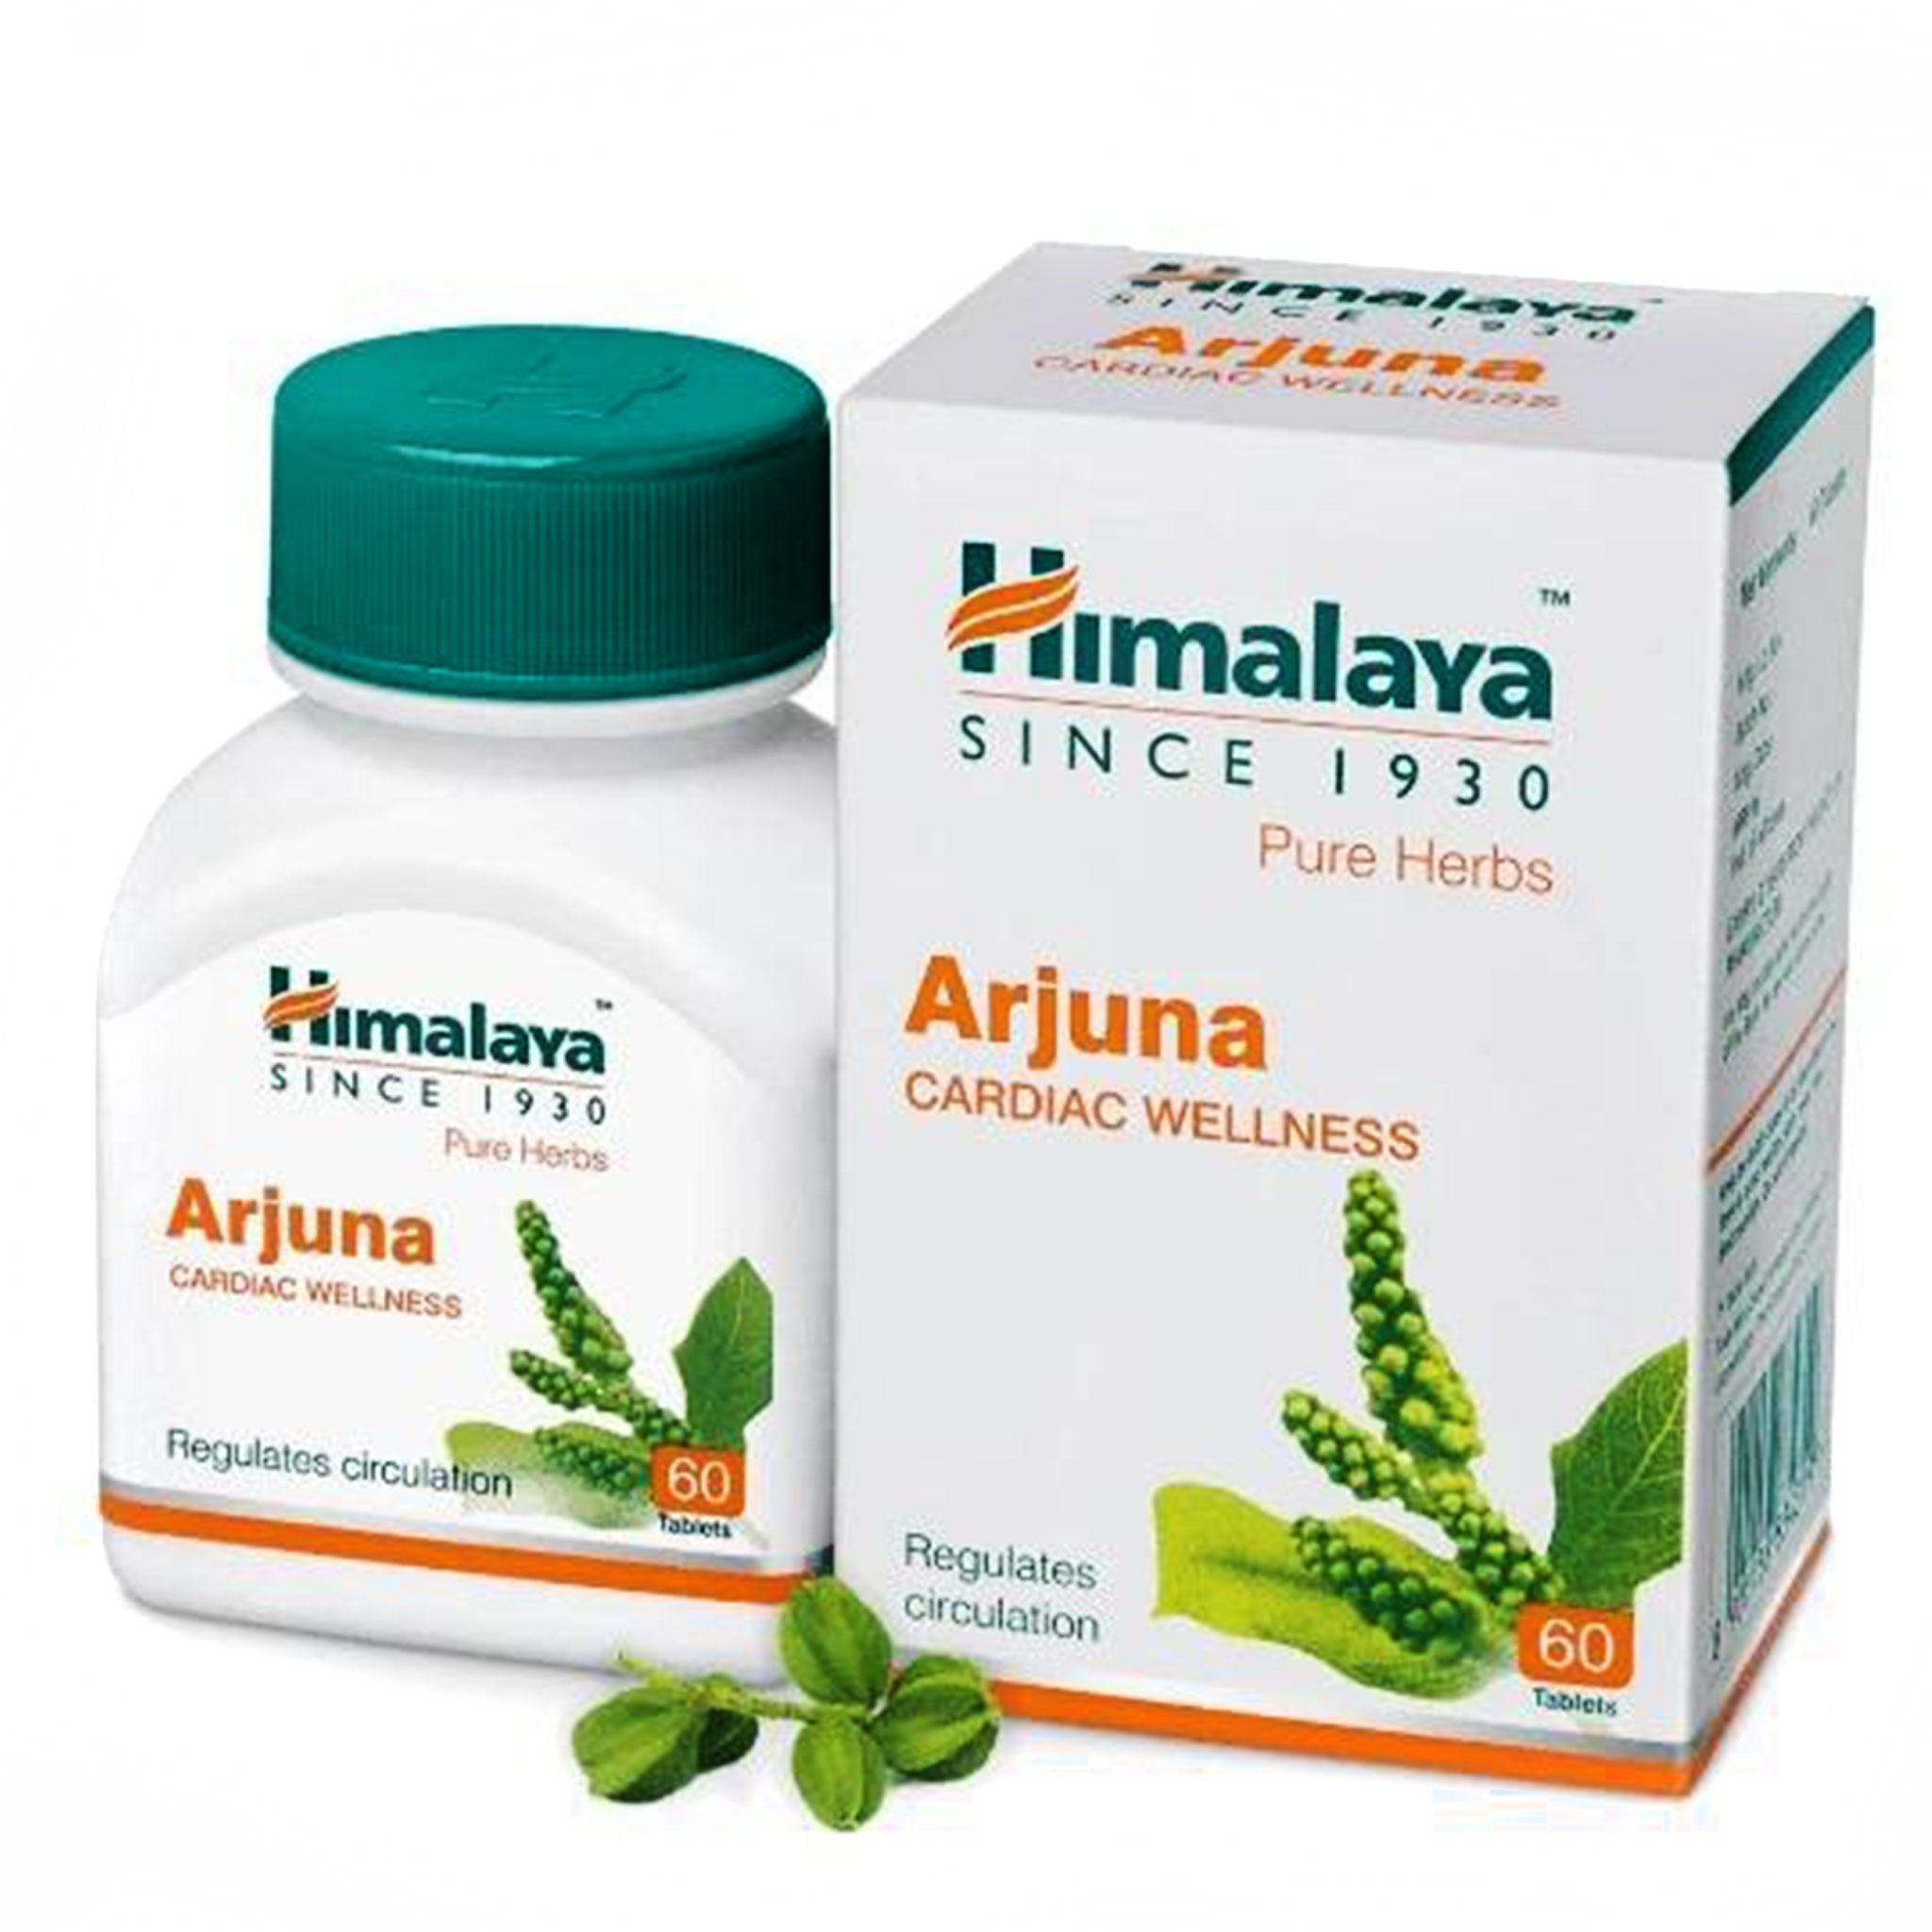 Himalaya Arjuna Pure Herbs 60 Tab  Cardiac Wellness Value Pack of 2 